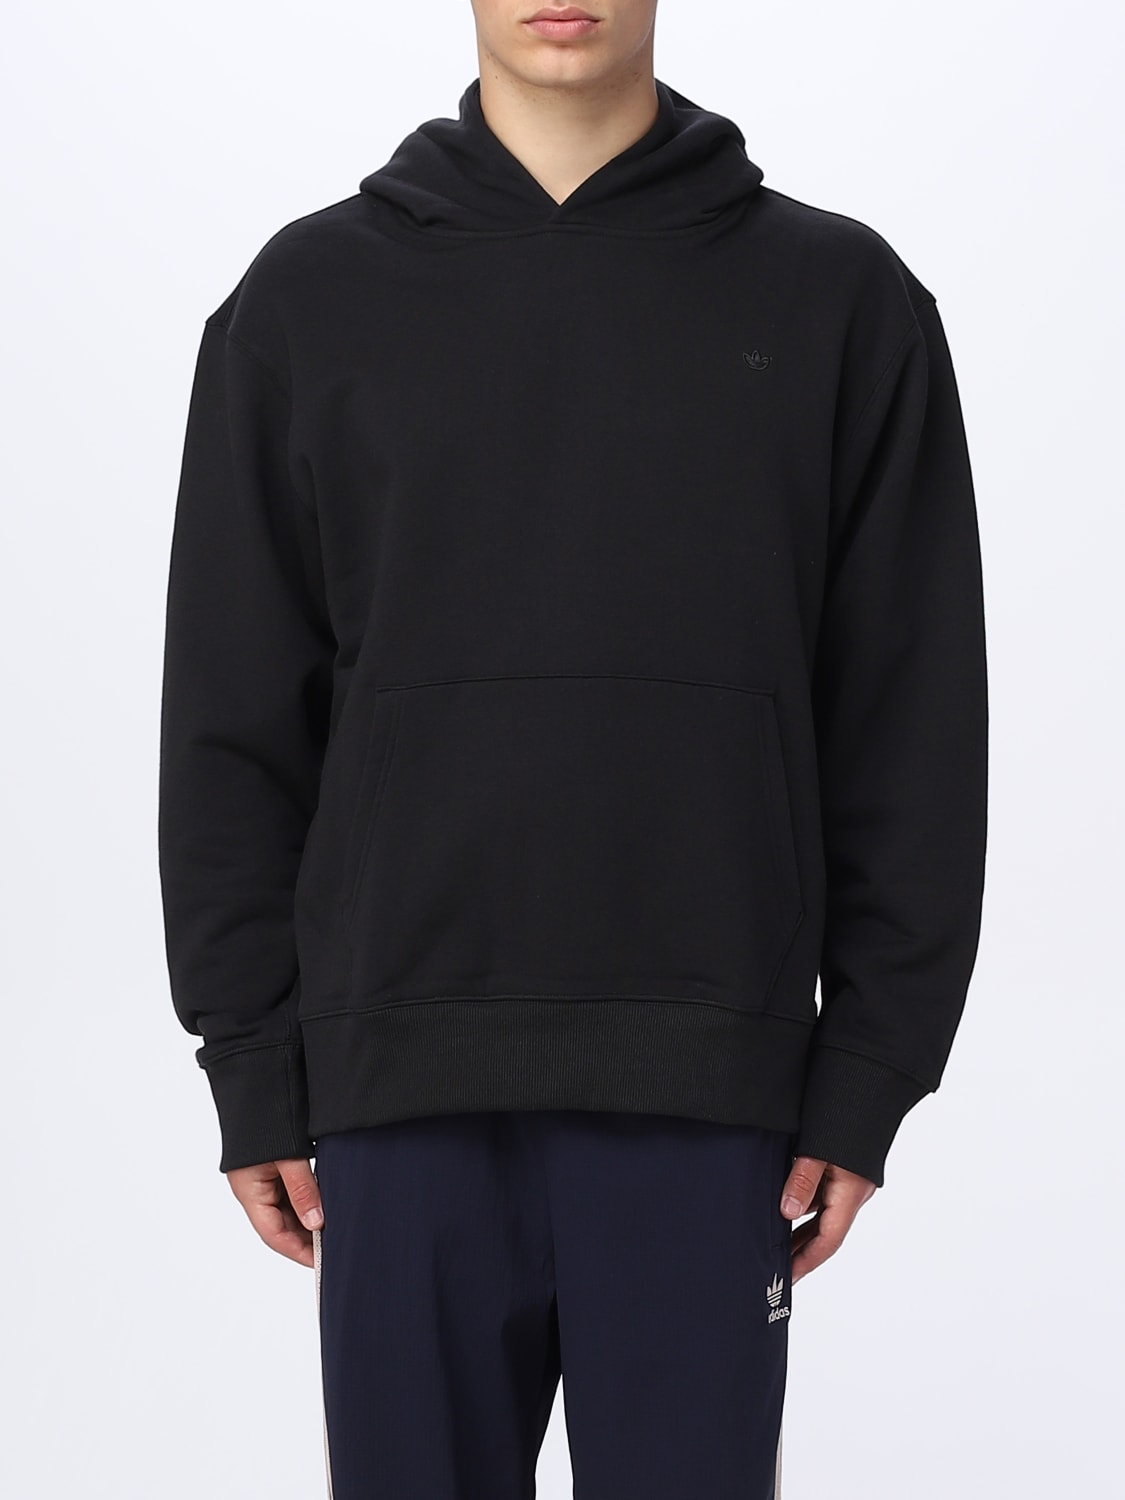 | at HK2937 Originals ORIGINALS: cotton Black in ADIDAS sweatshirt - Adidas sweatshirt online